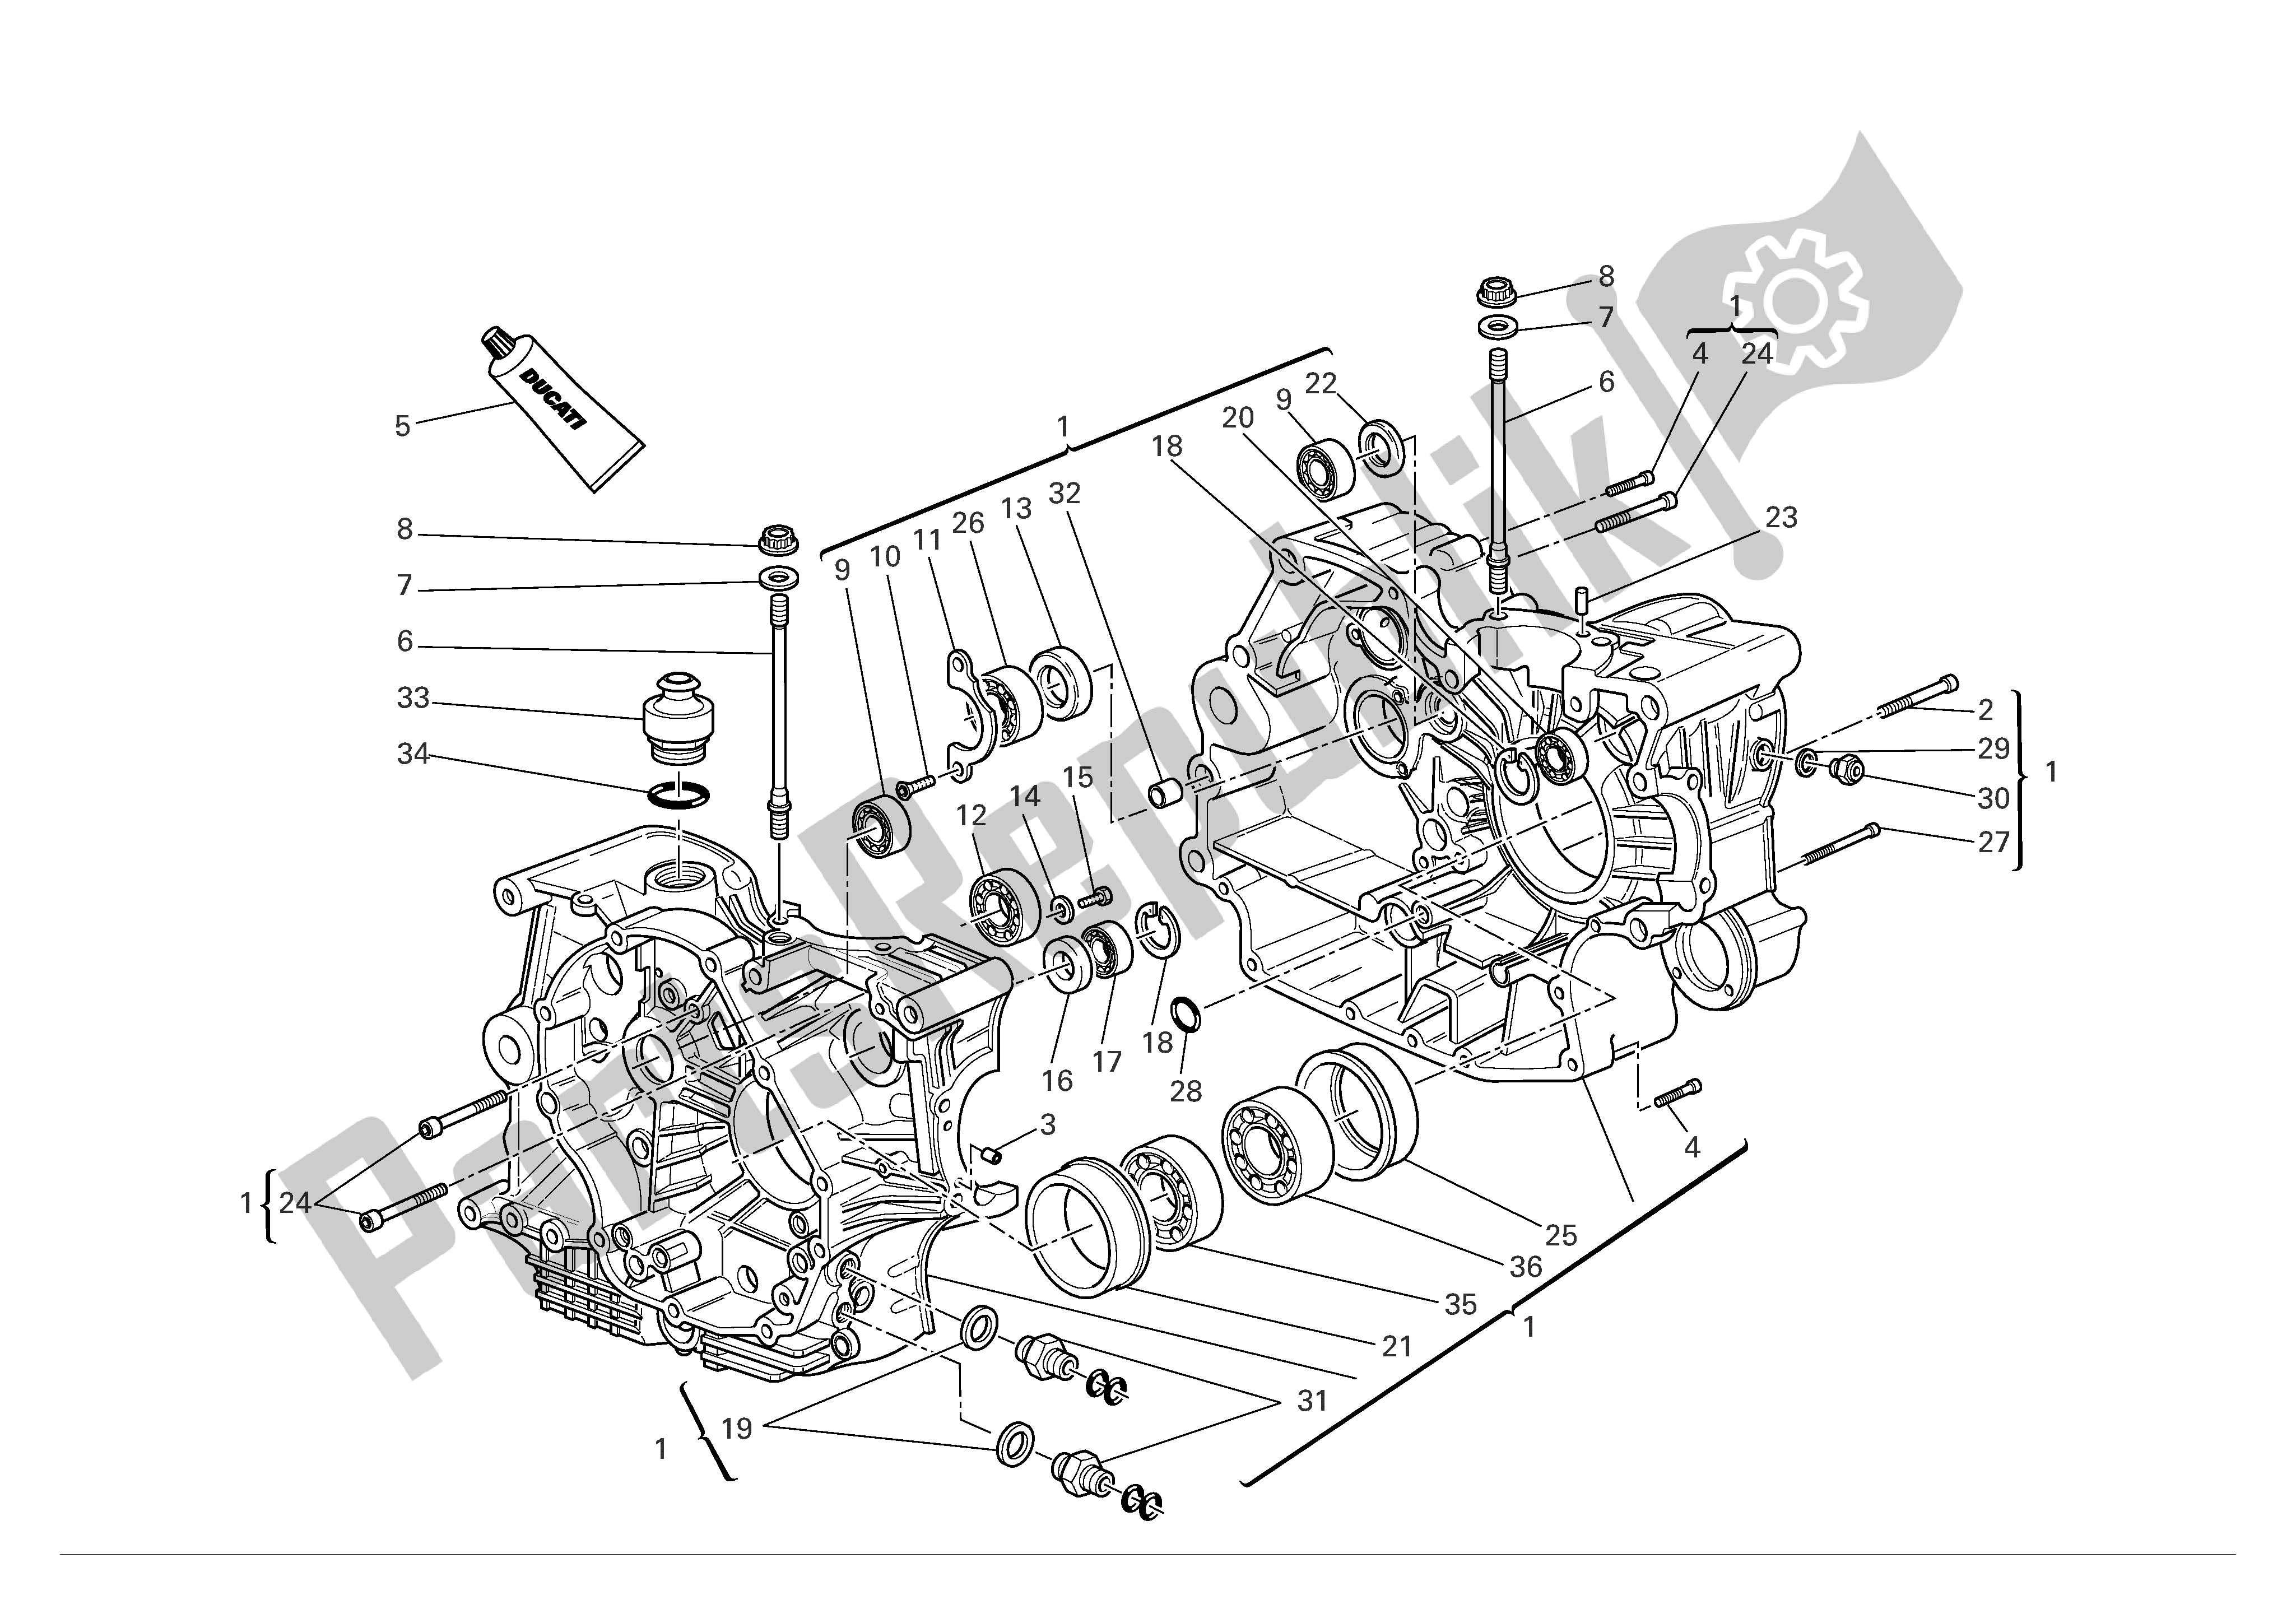 All parts for the Crankcase Halves of the Ducati Multistrada S 1100 2007